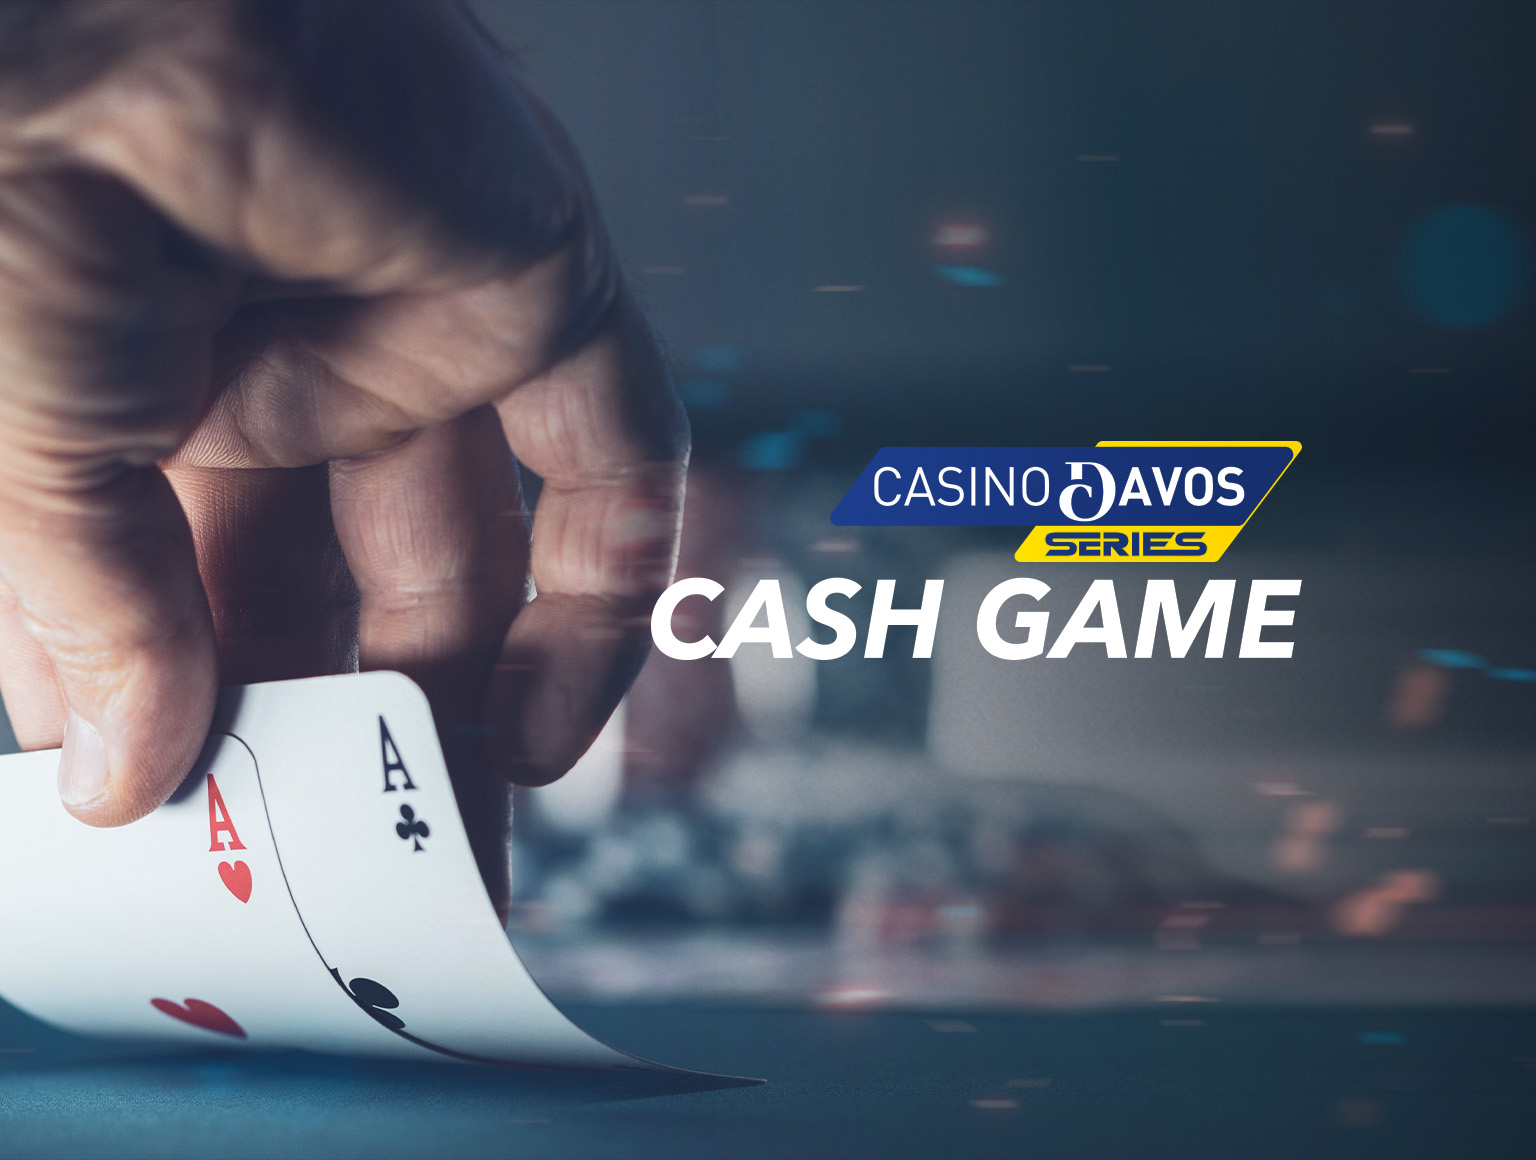 Casino Davos Series Cash Game